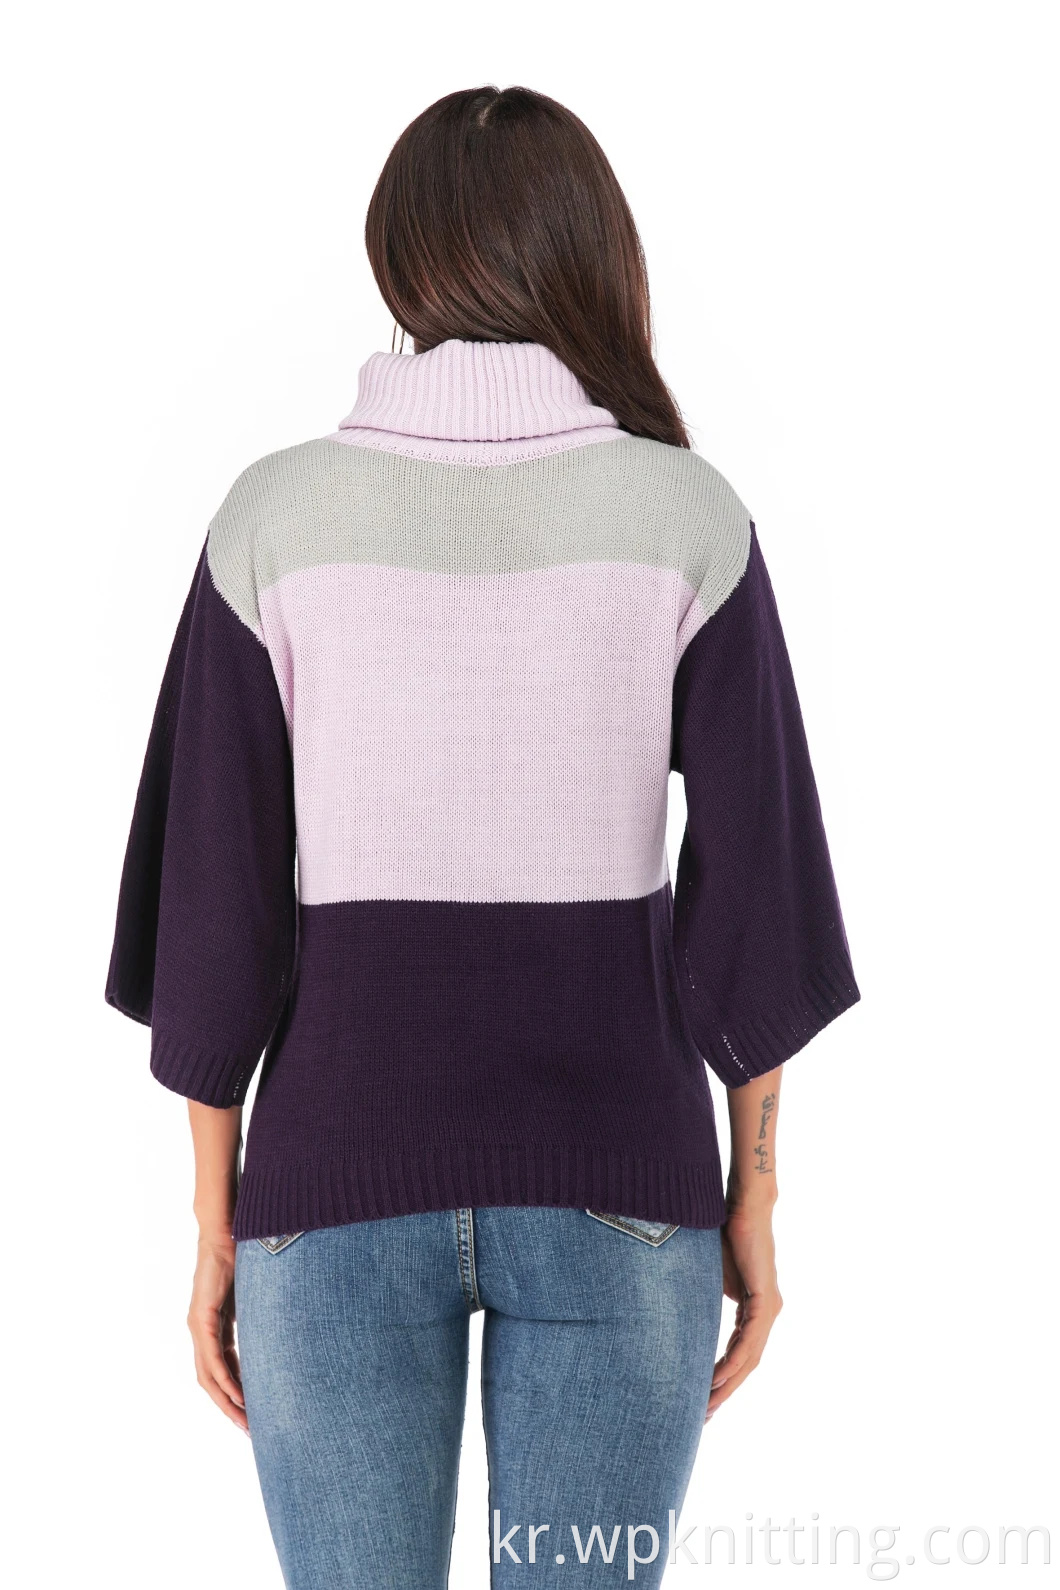 Turtleneck 니트웨어 플레어 슬리브 의류 여성 패션 캐주얼 스웨터